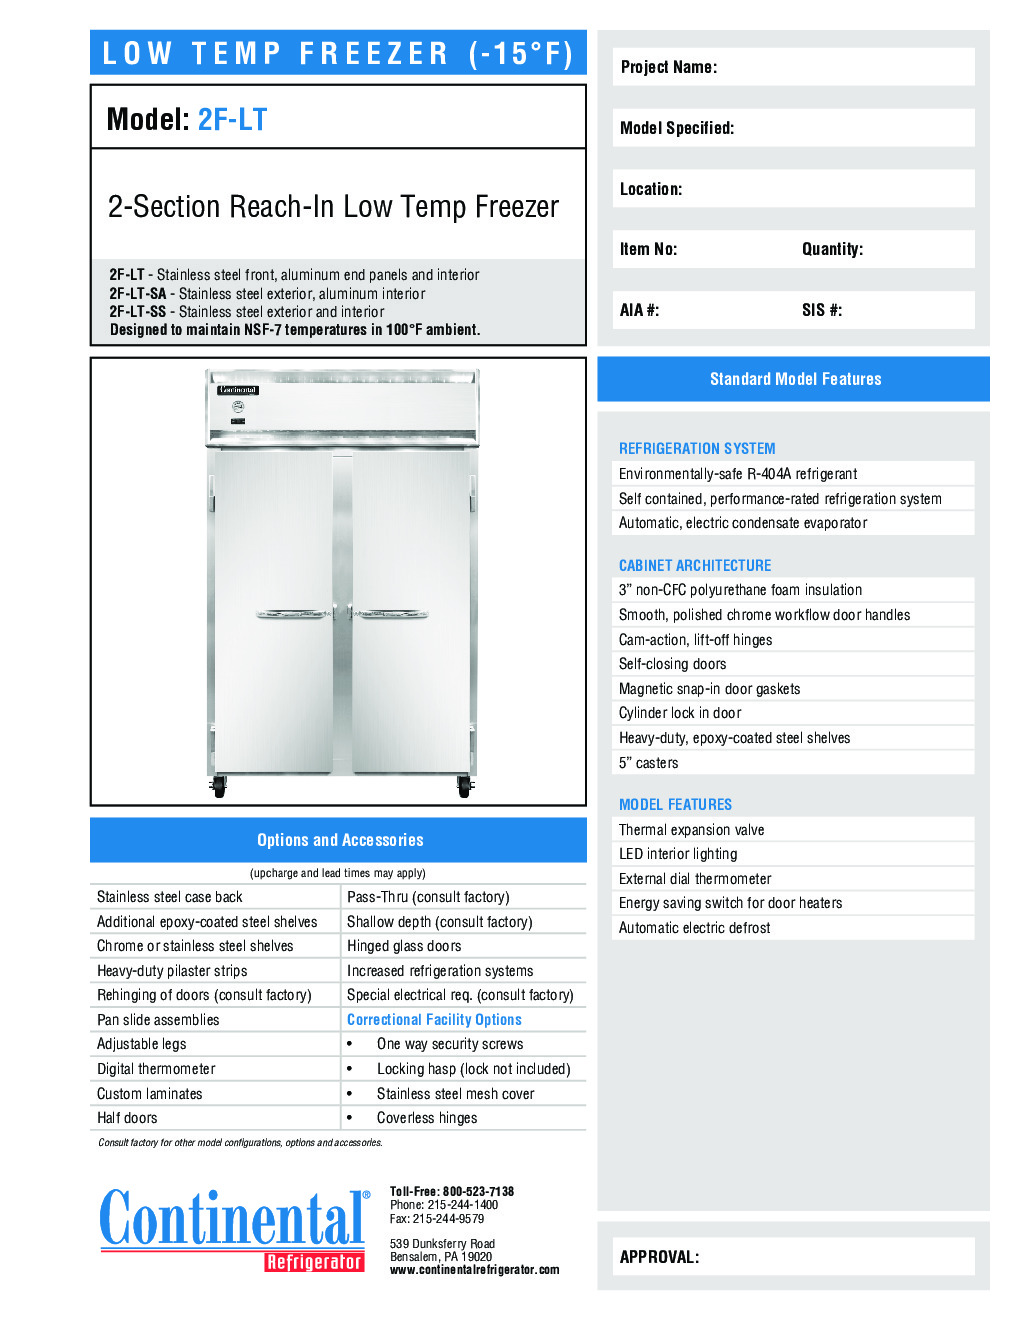 Continental Refrigerator 2F-LT-SS Reach-In Low Temperature Freezer